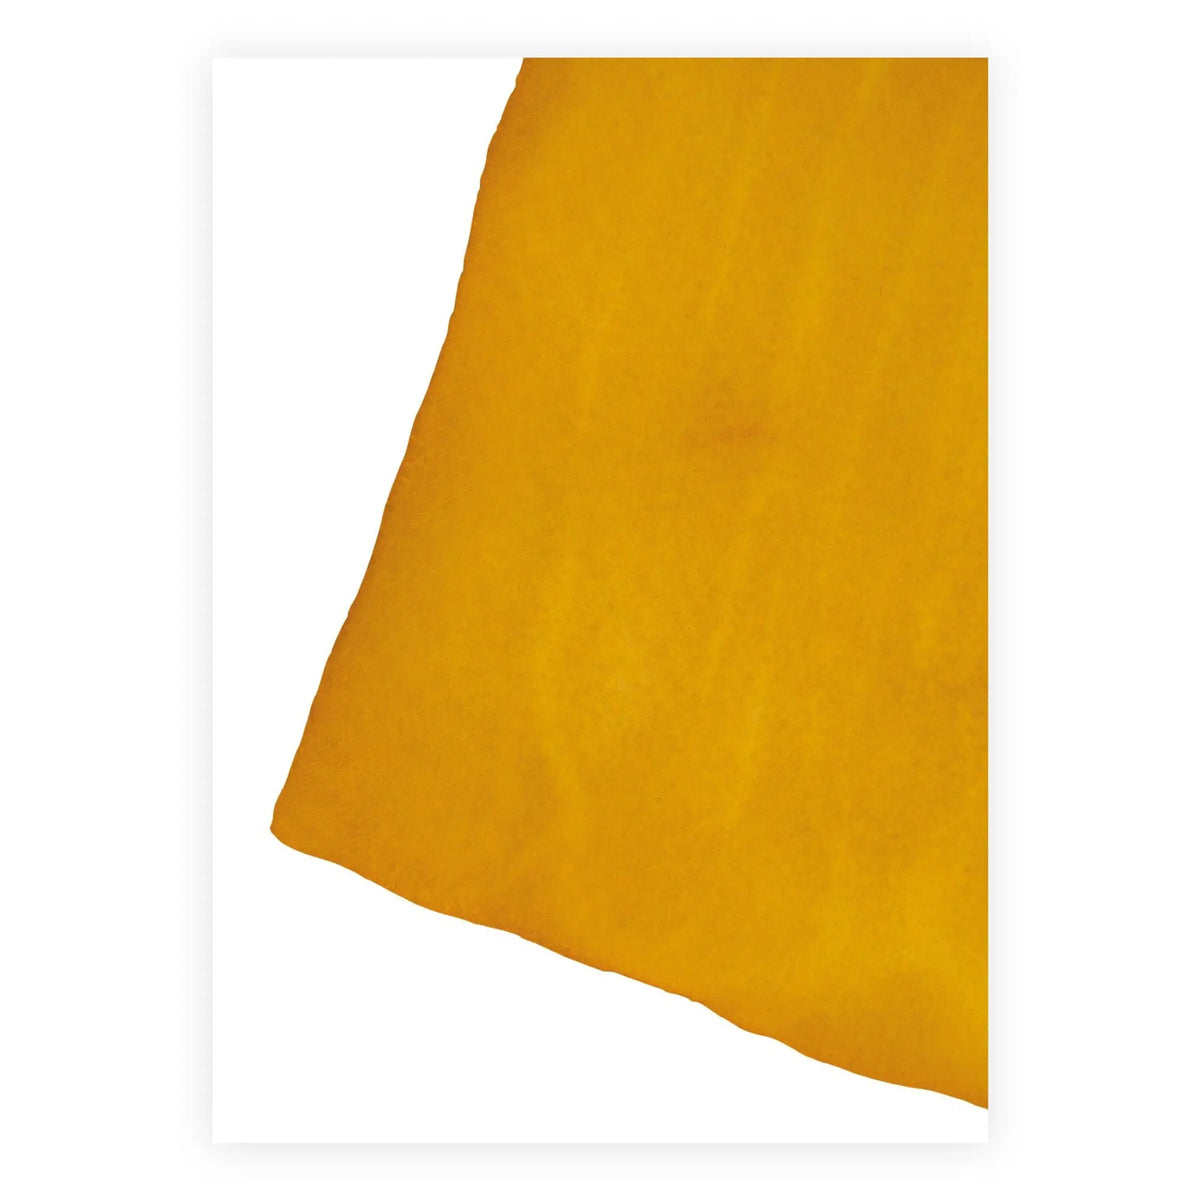 Paper Collective Ensõ  Yellow I juliste - Laatukaluste